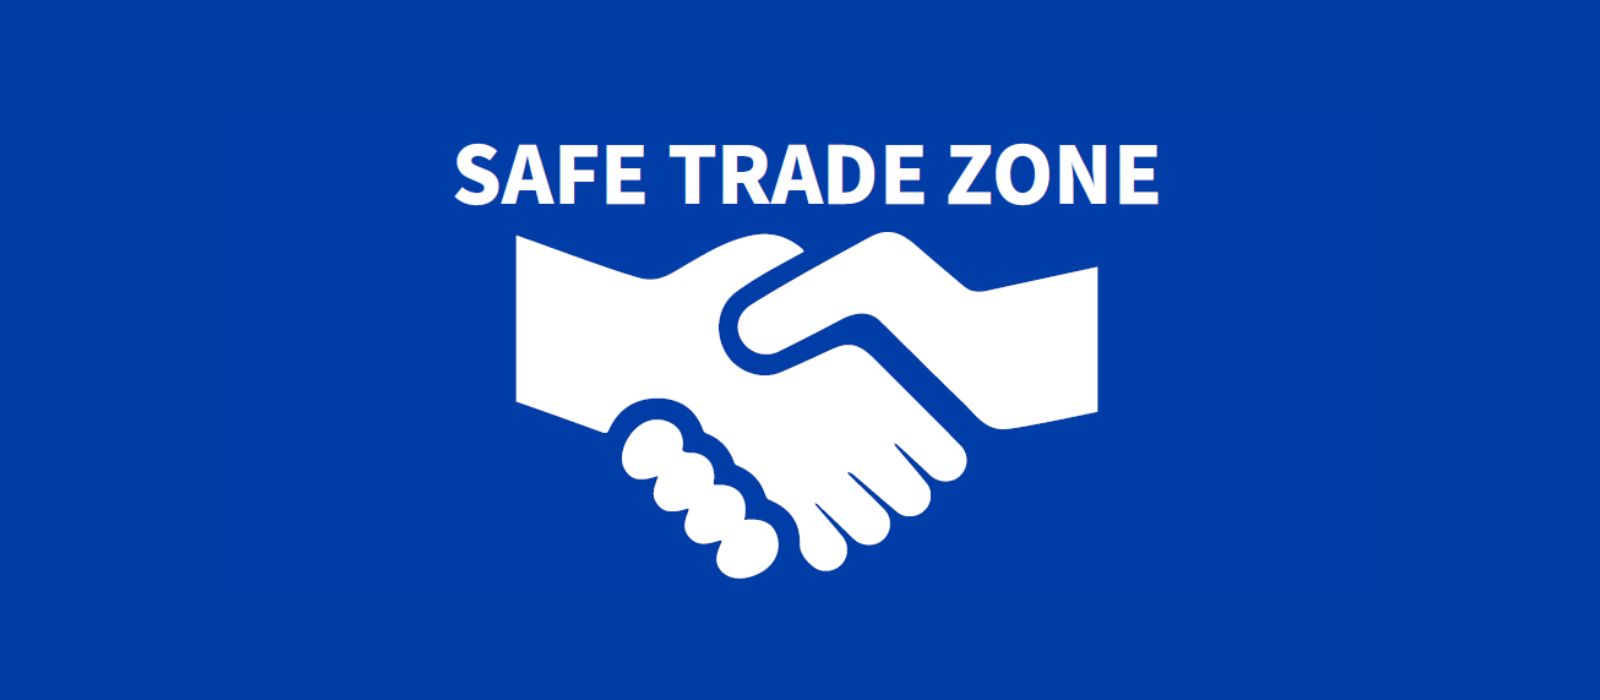 Safe trade zone